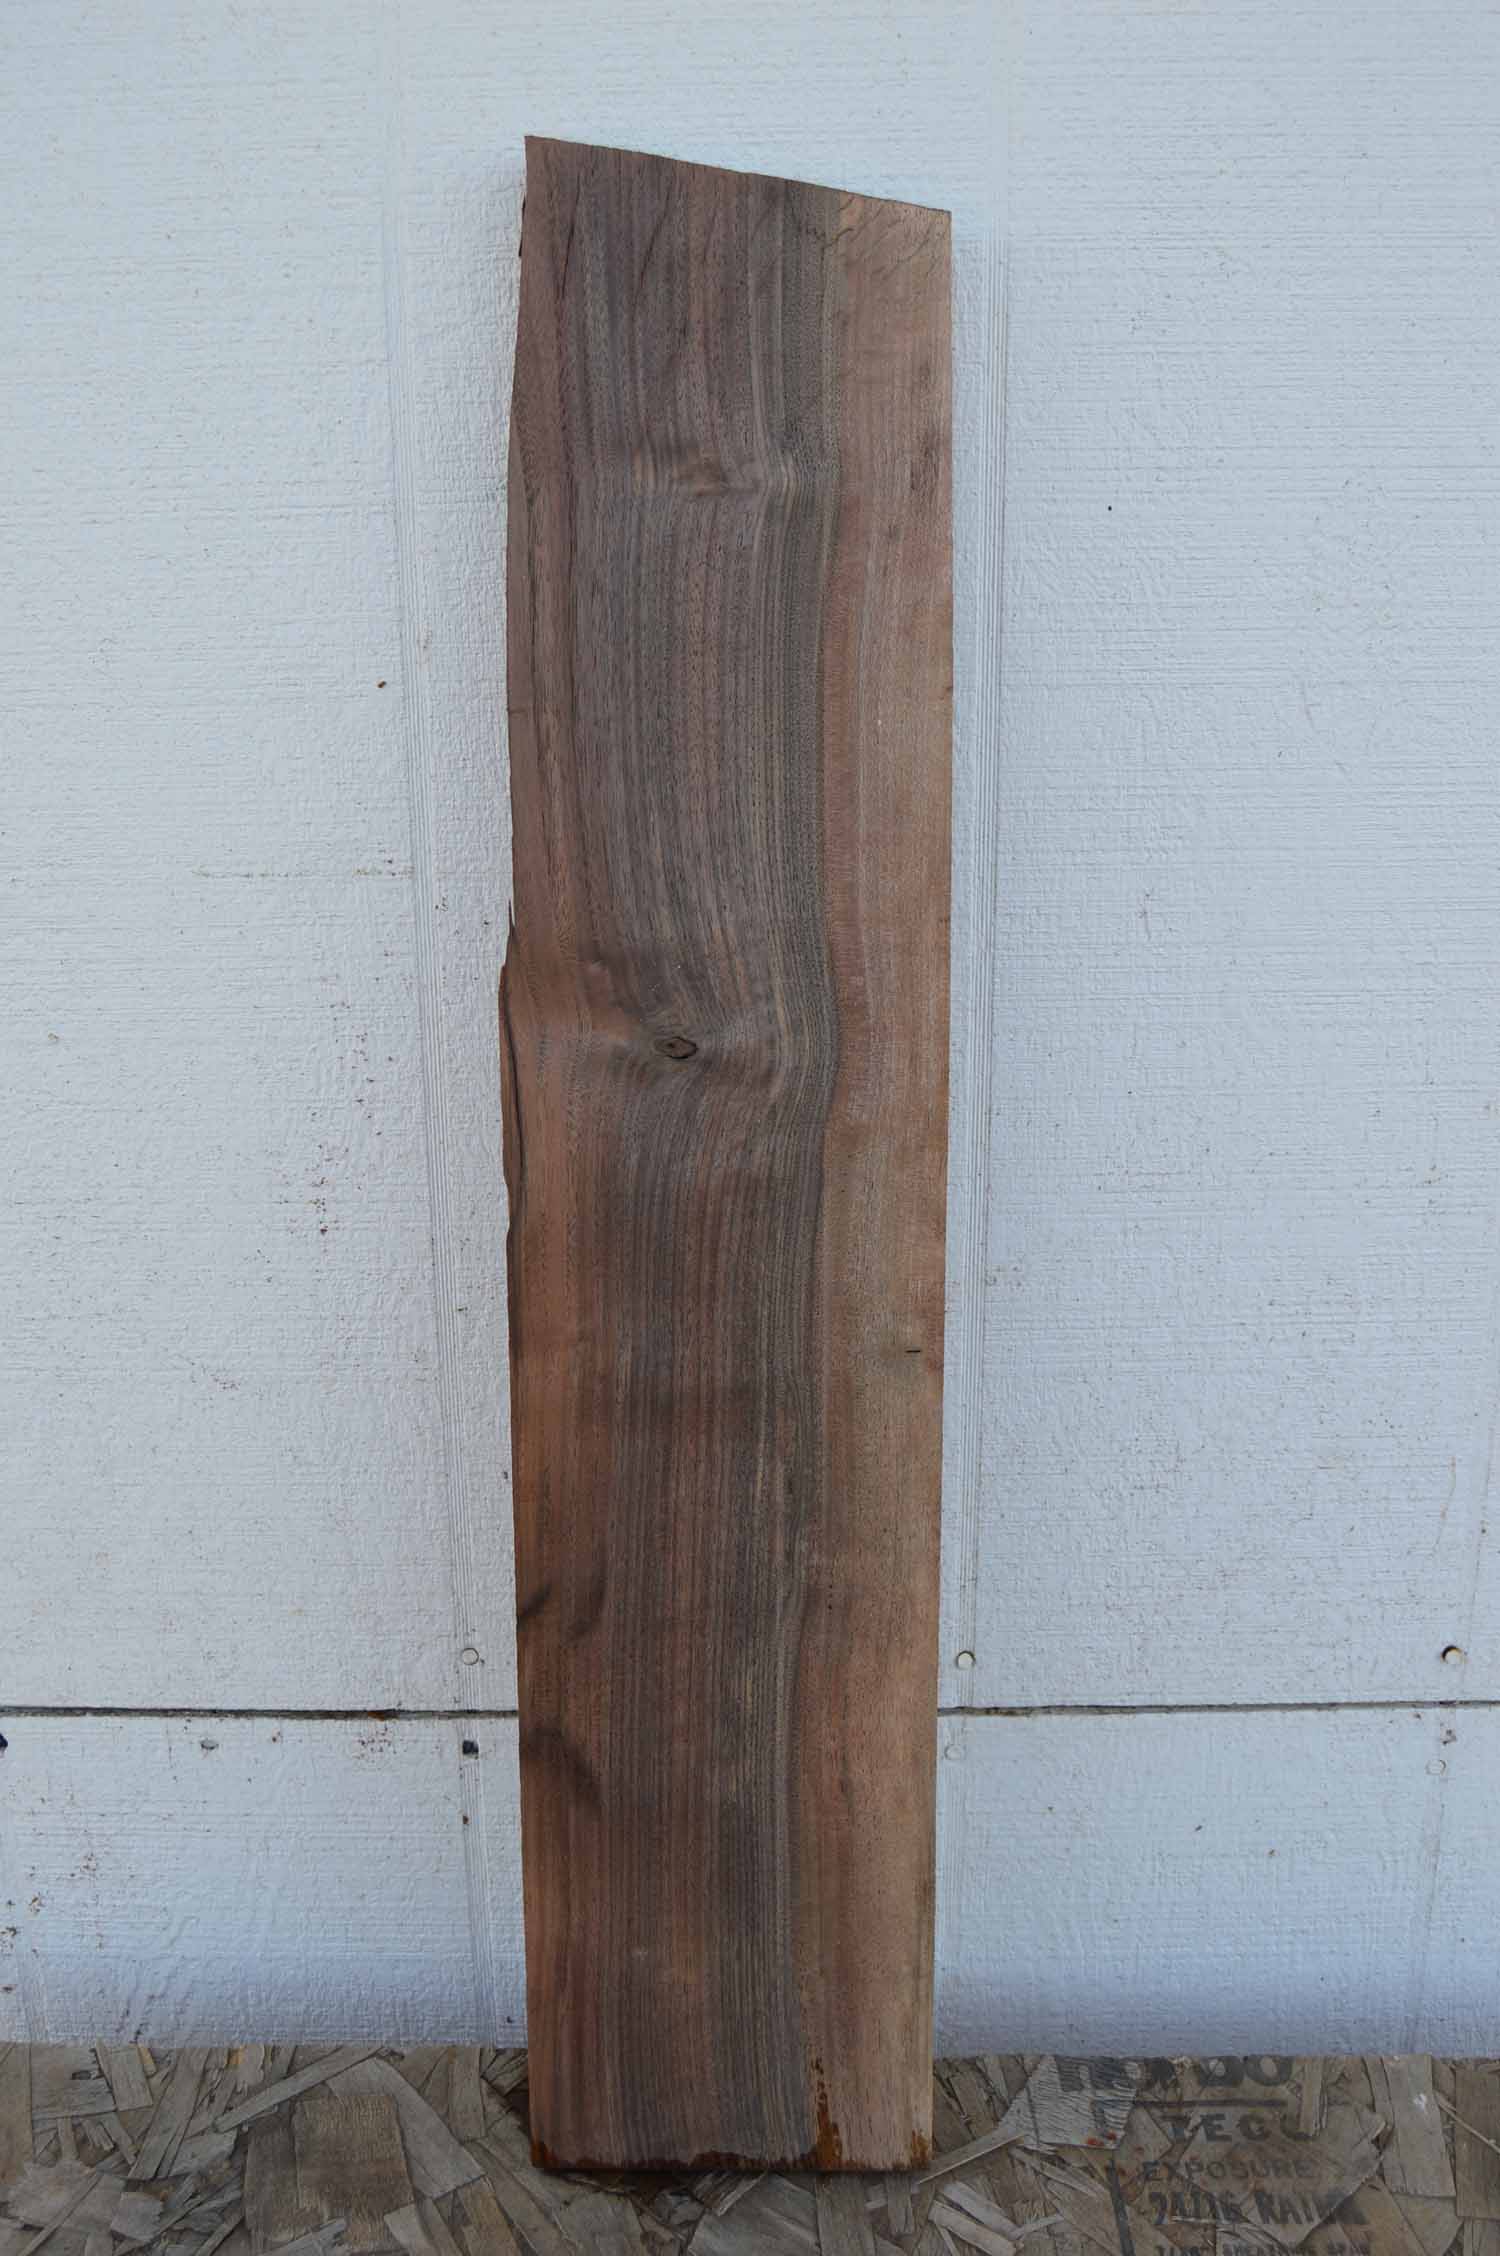 Claro Walnut Lumber CLALMB49